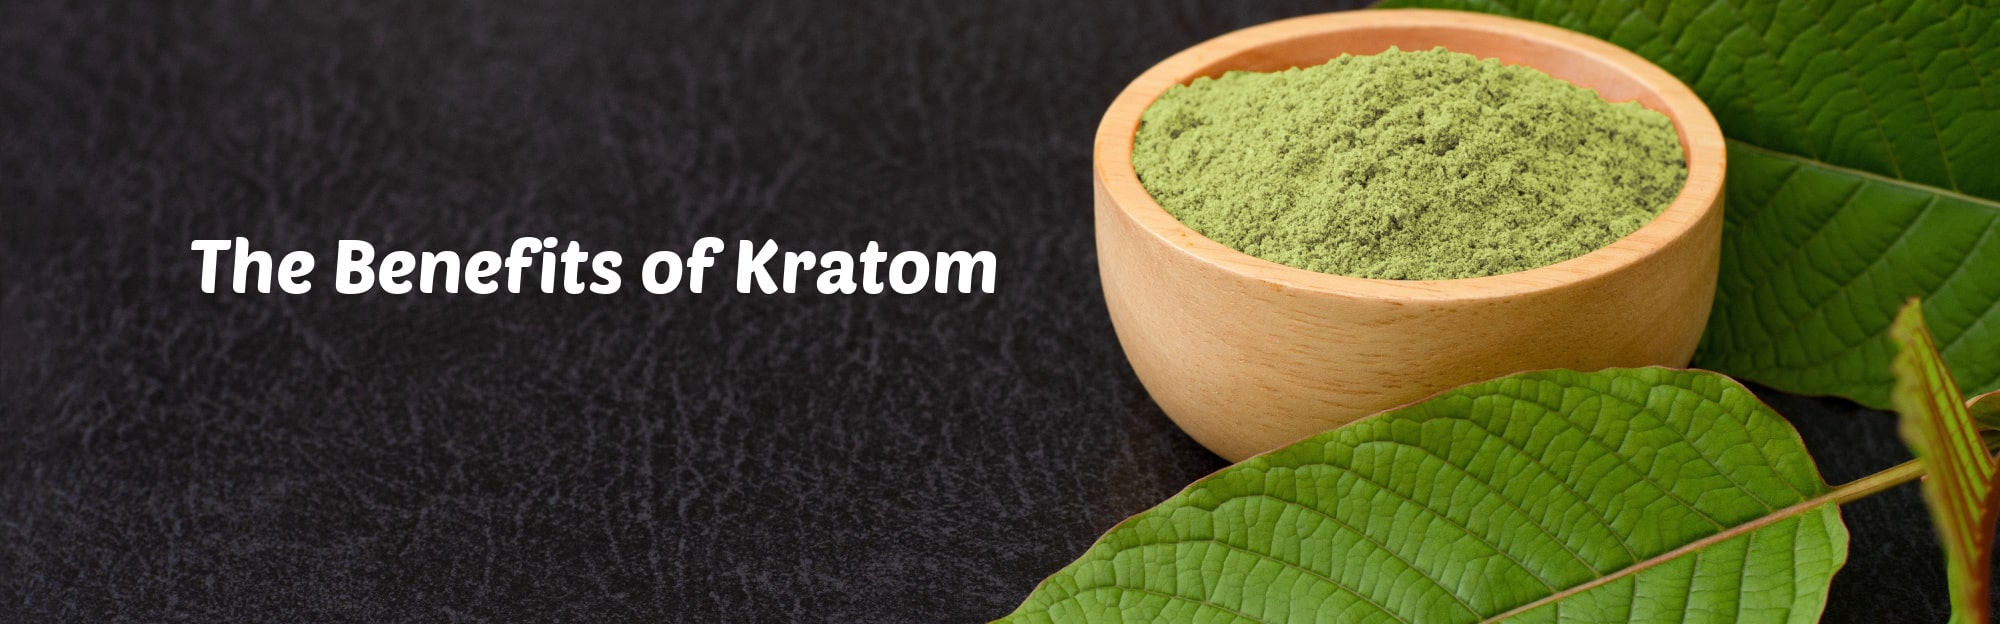 image of the benefits of kratom